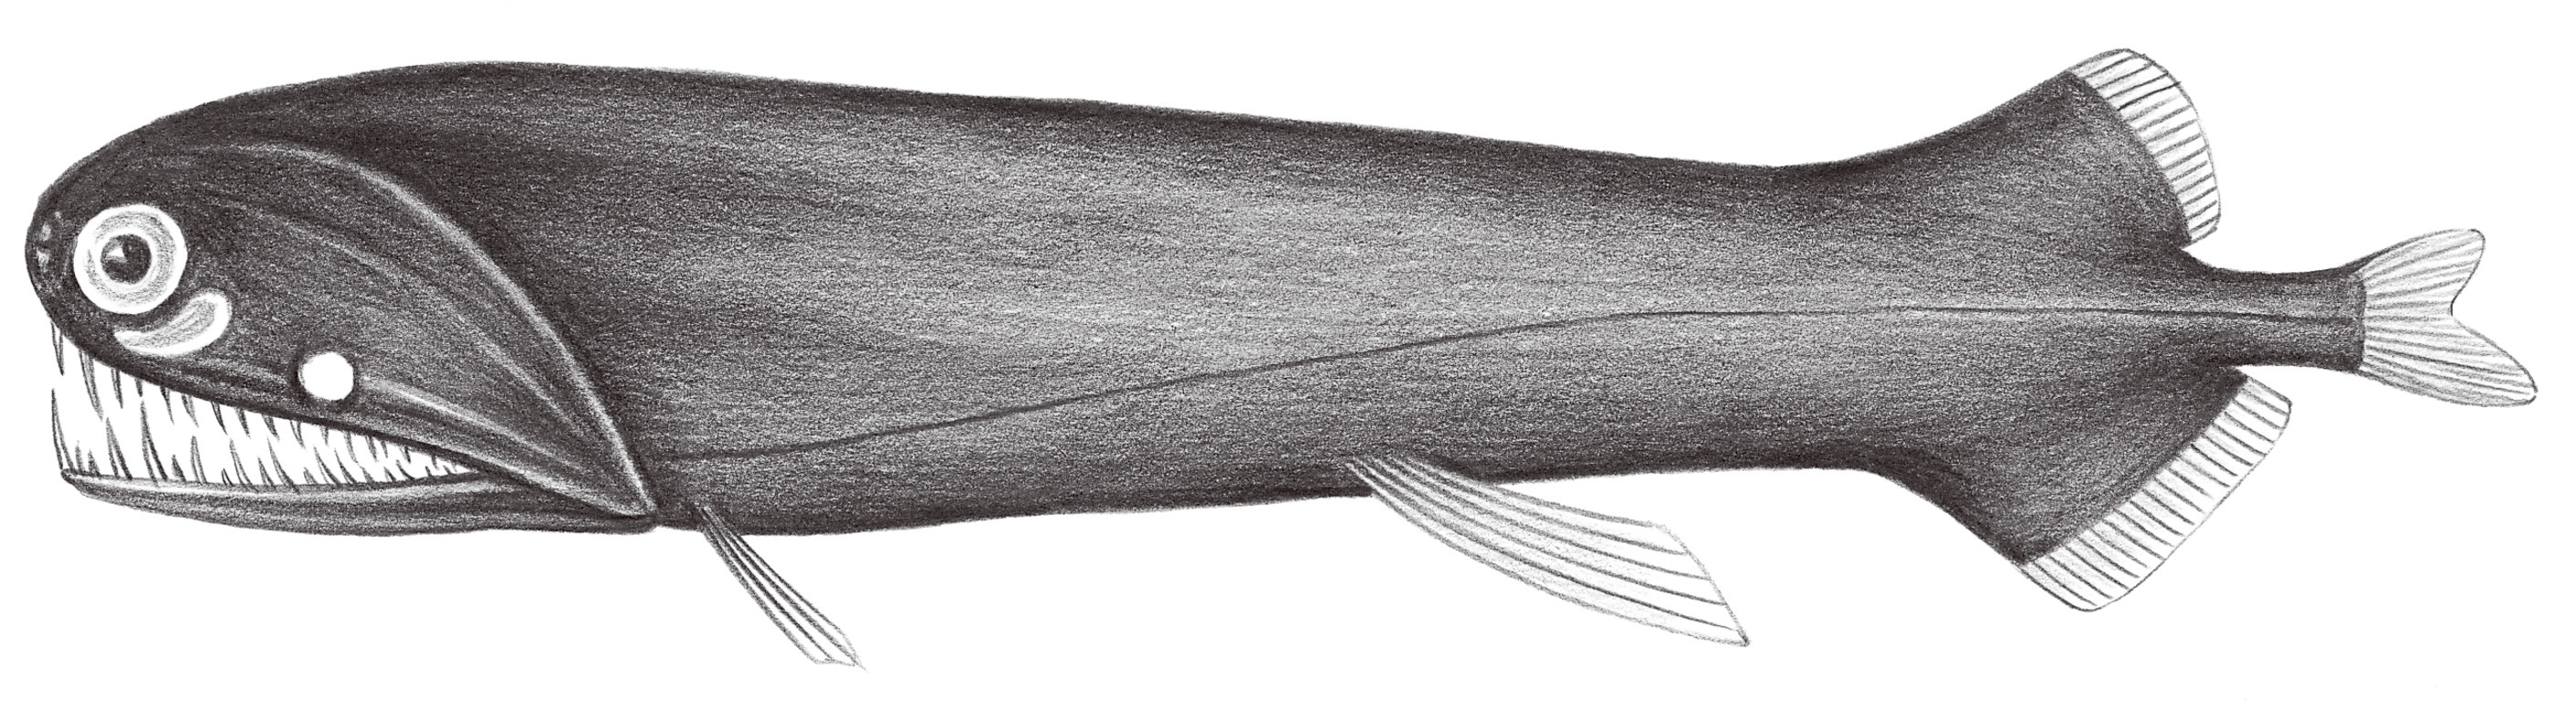 440.	黑柔骨魚 Malacosteus niger Ayres, 1848